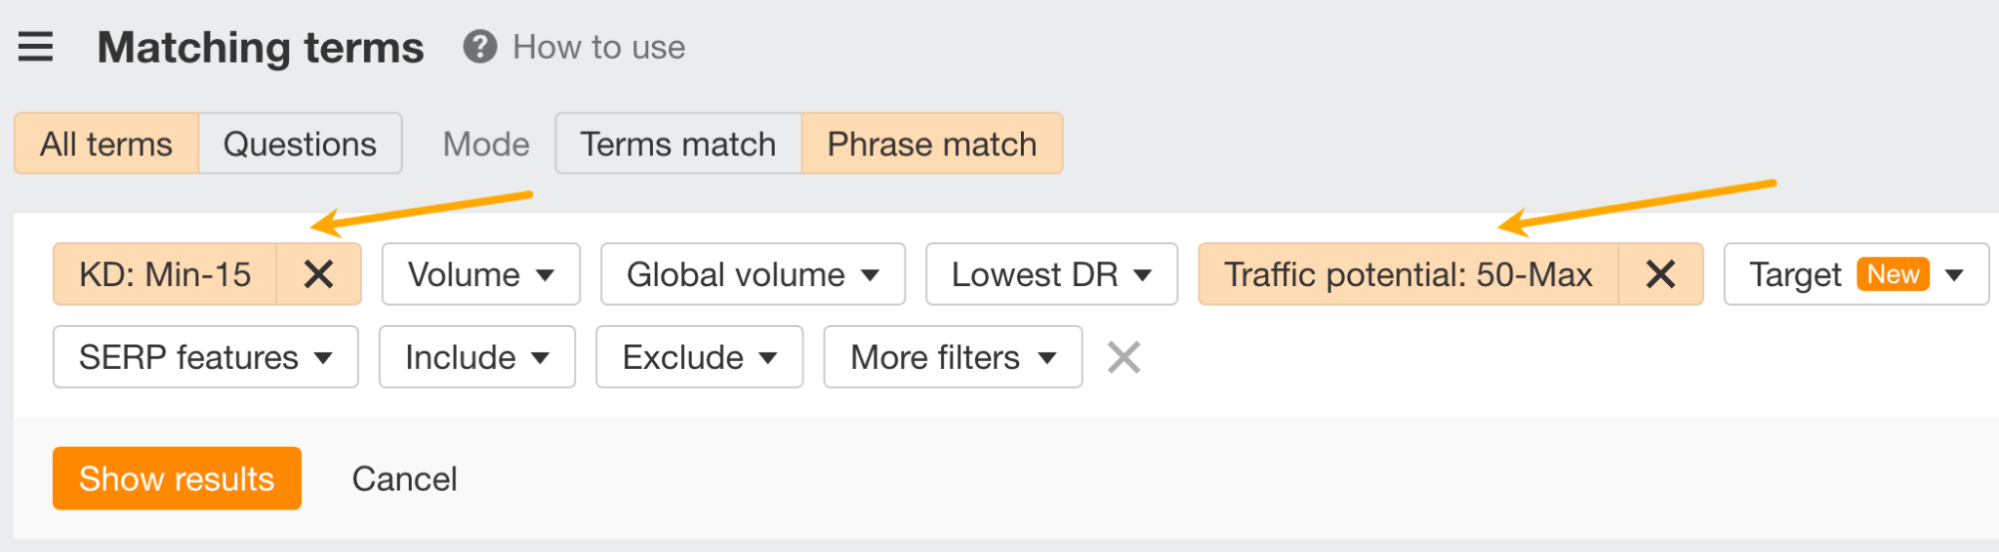 Refining keyword results using filters.